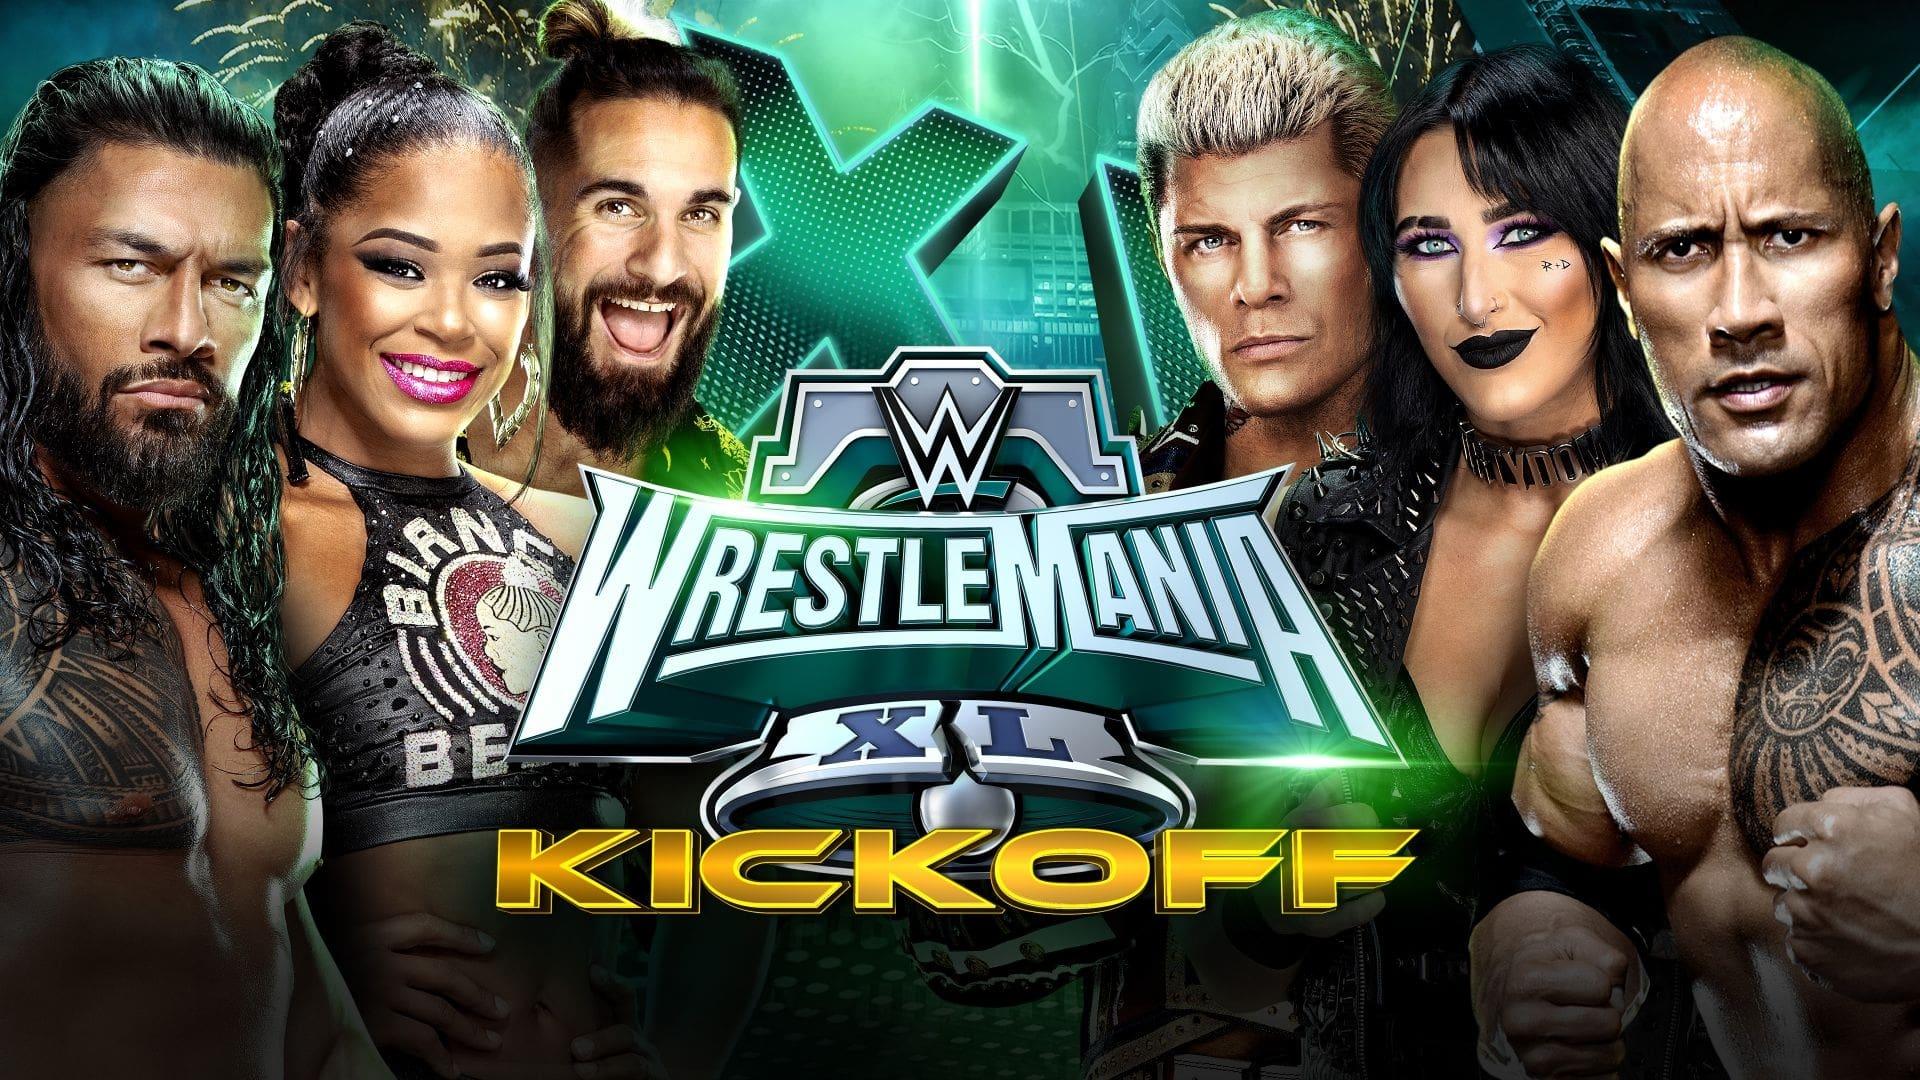 WWE WrestleMania XL Kickoff Press Event backdrop